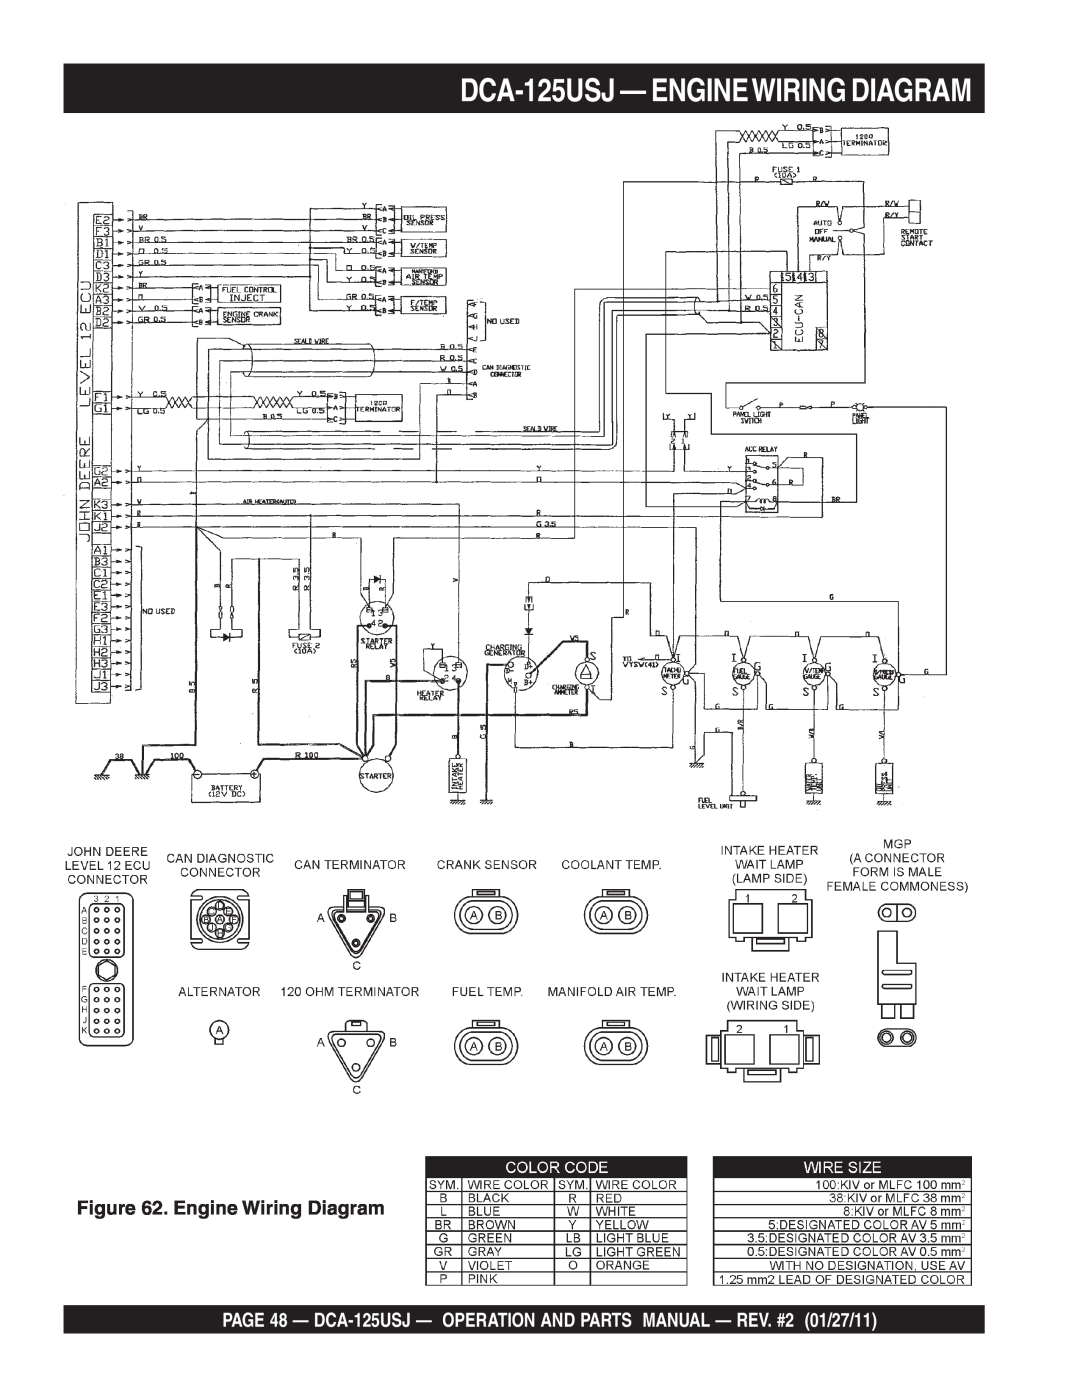 Multiquip DCA125USJ operation manual DCA-125USJ - ENGINEWIRING DIAGRAM, Engine Wiring Diagram 